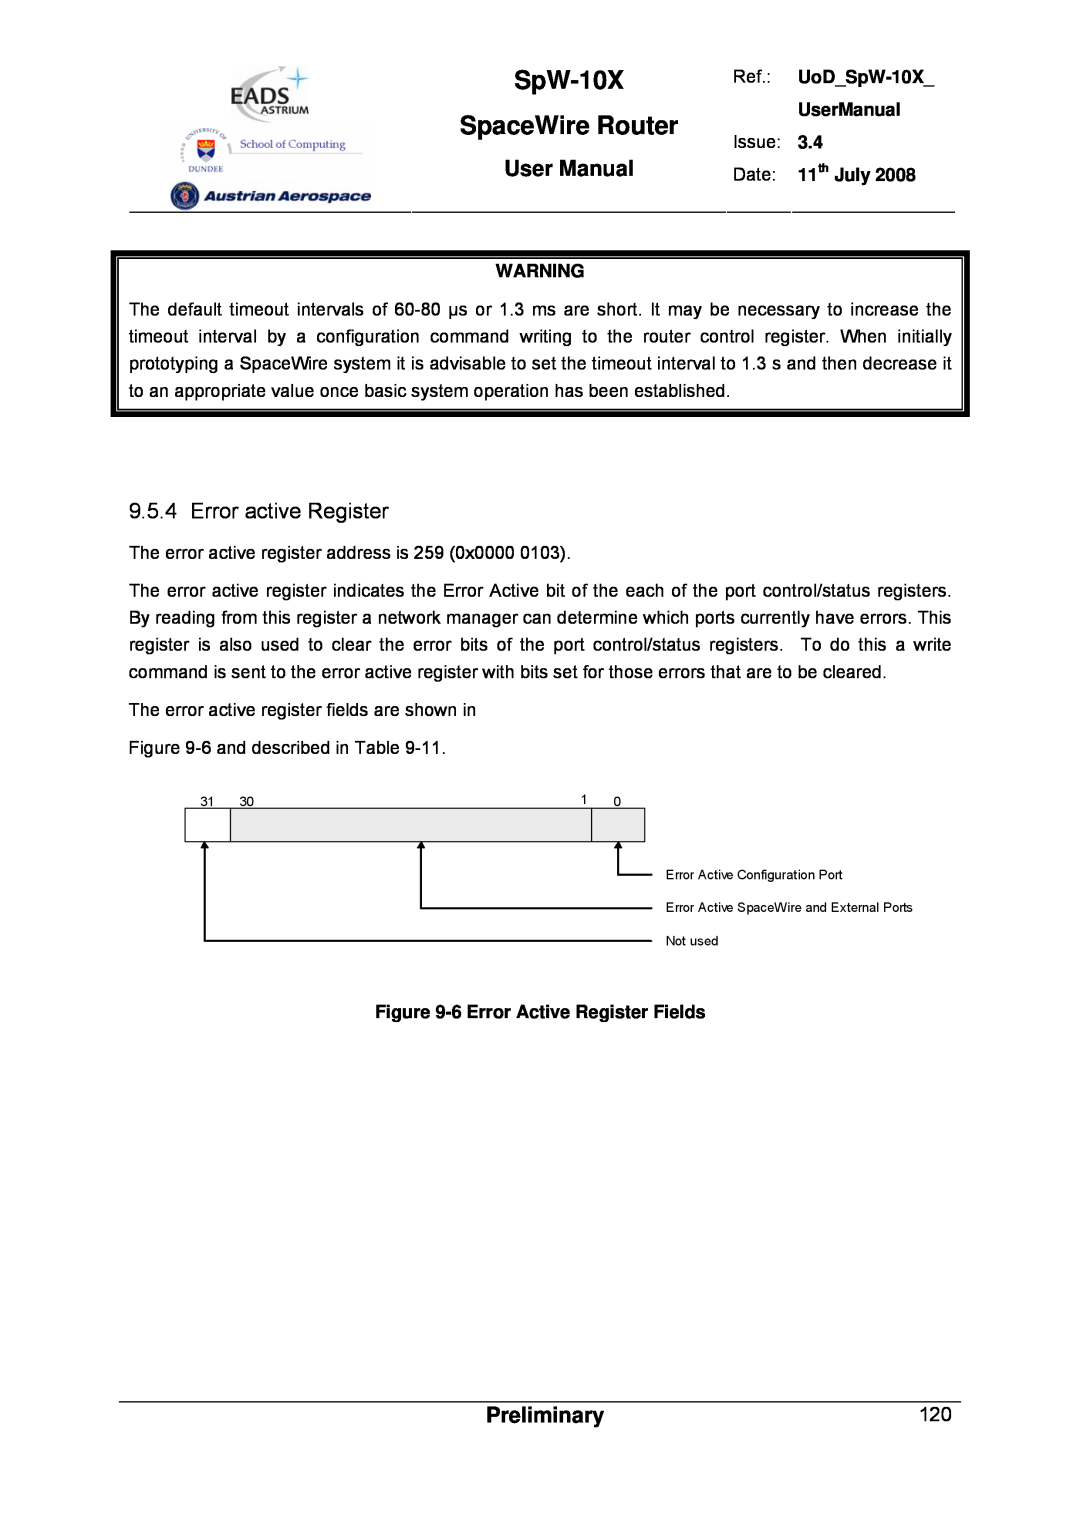 Atmel SpW-10X user manual Error active Register, SpaceWire Router, User Manual, Preliminary 